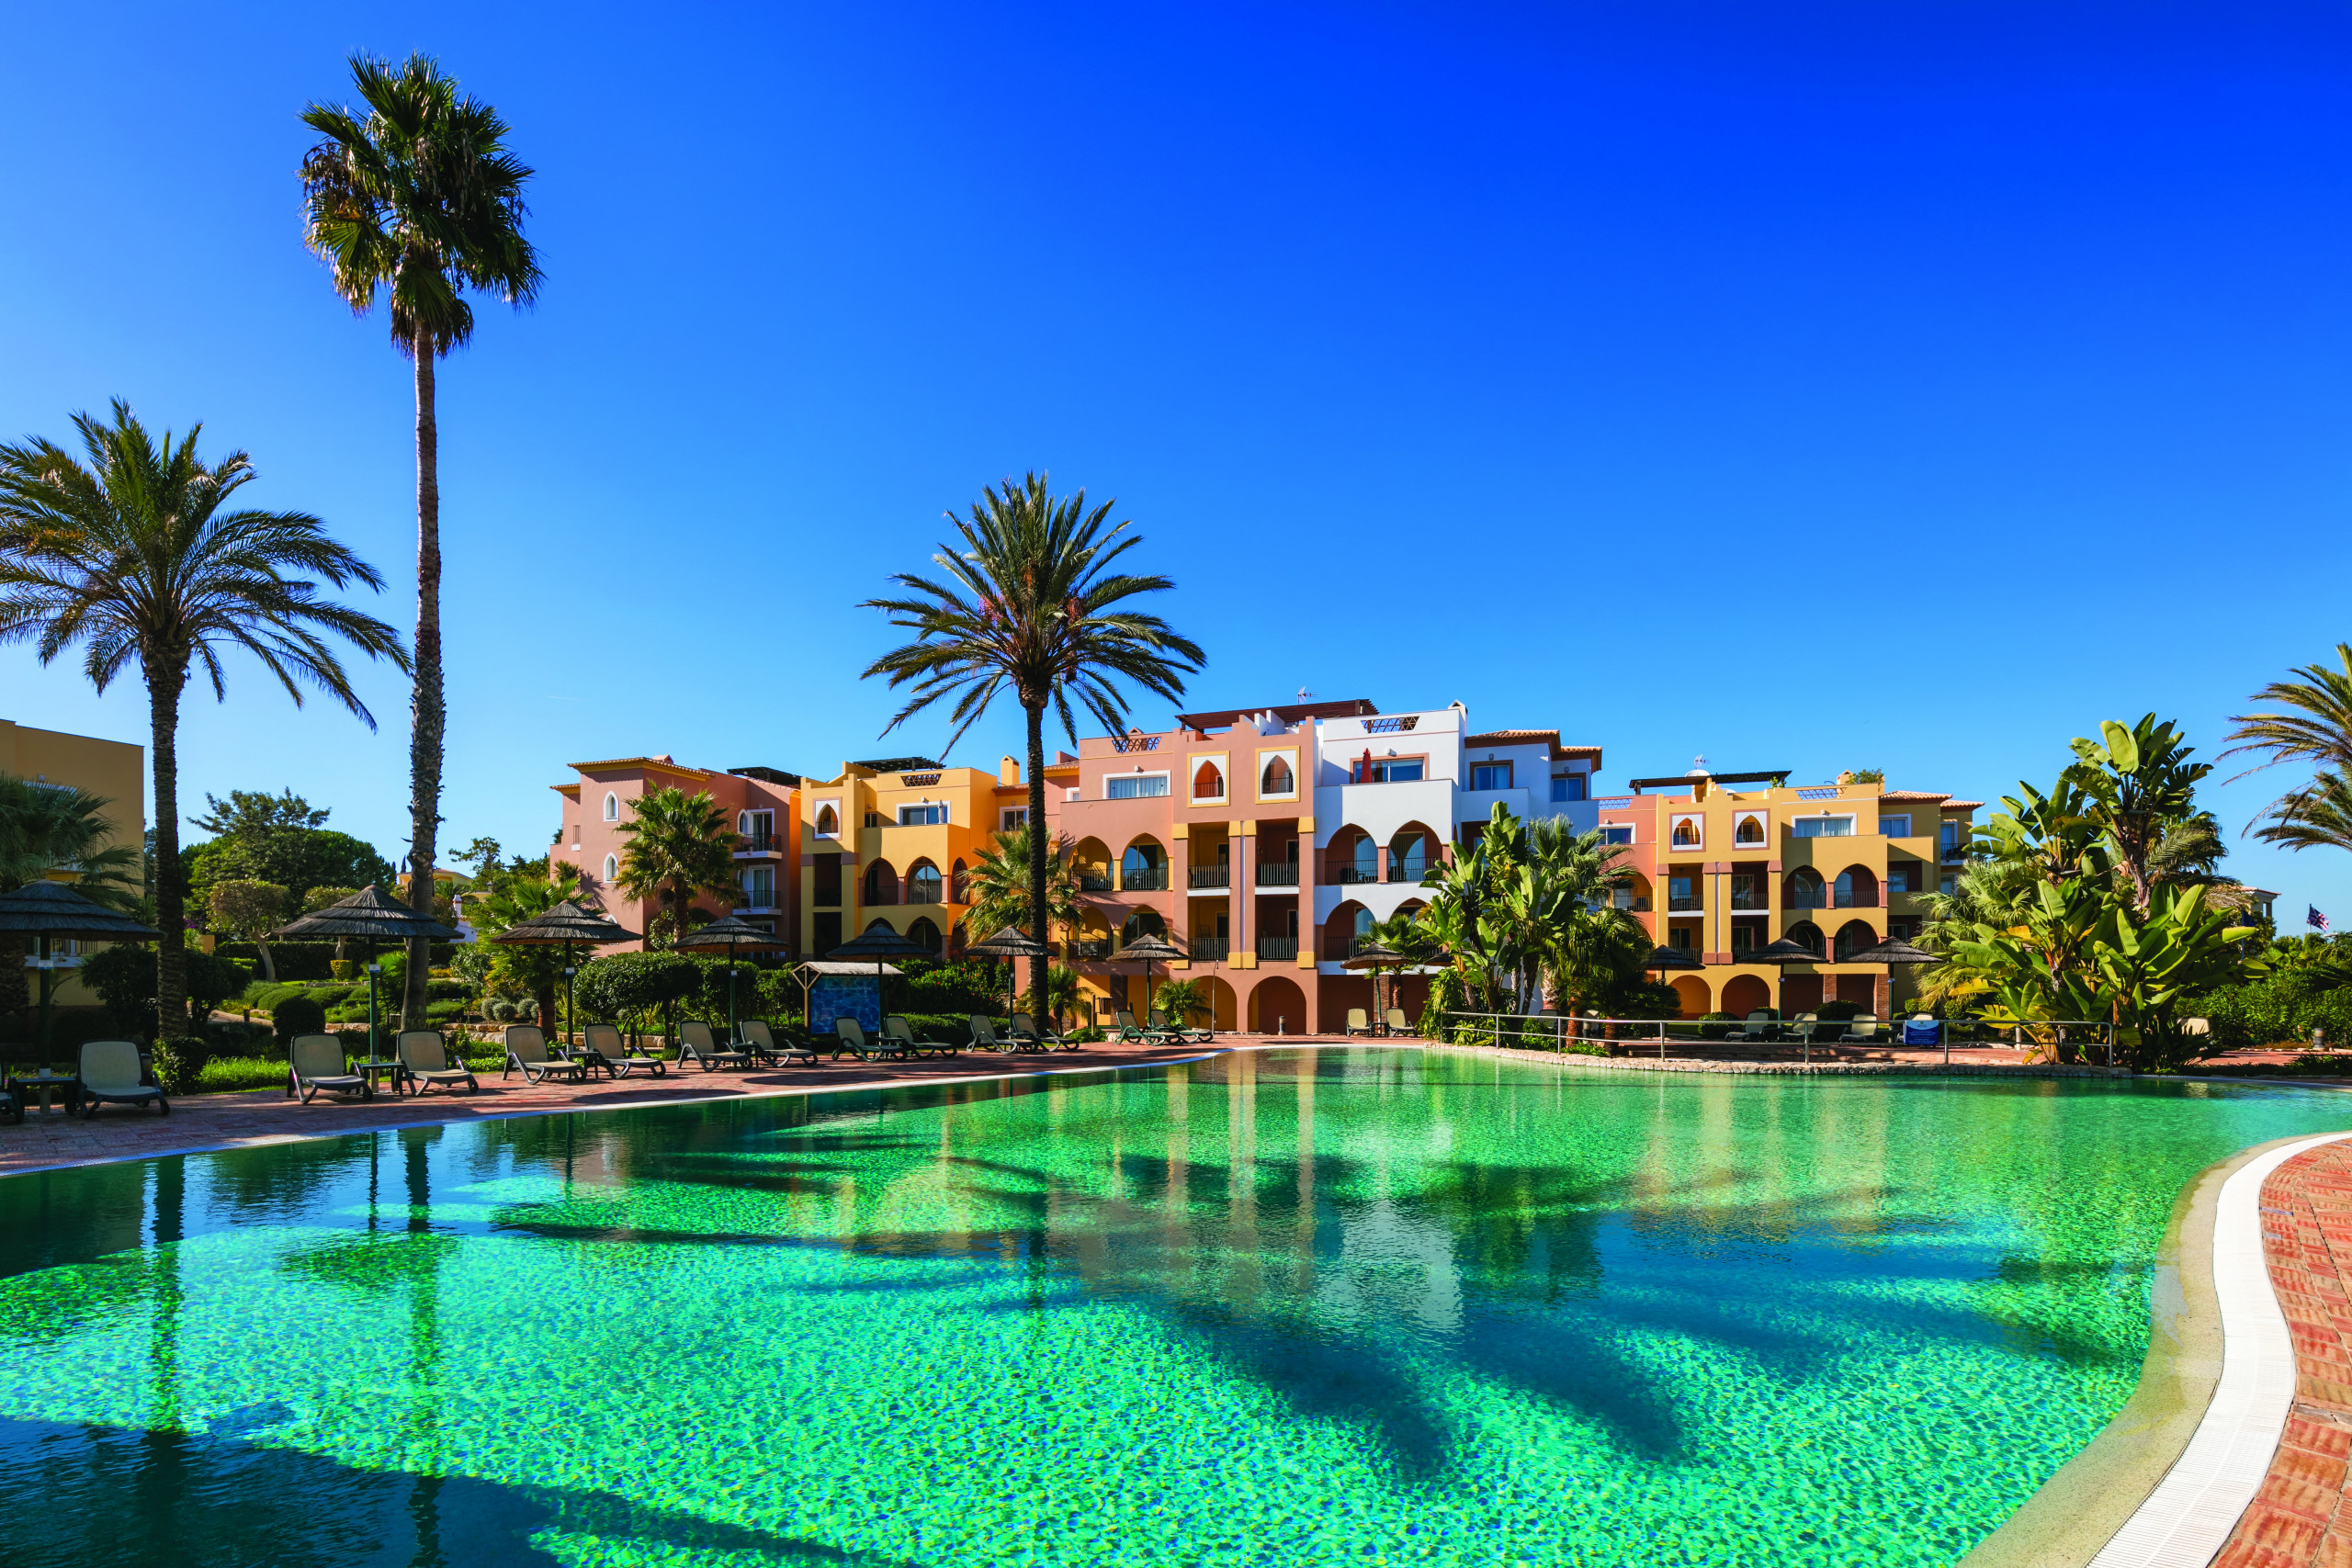 Jardim da Meia Praia, Luz 101 - Townhouses for Rent in Lagos, Algarve,  Portugal - Airbnb